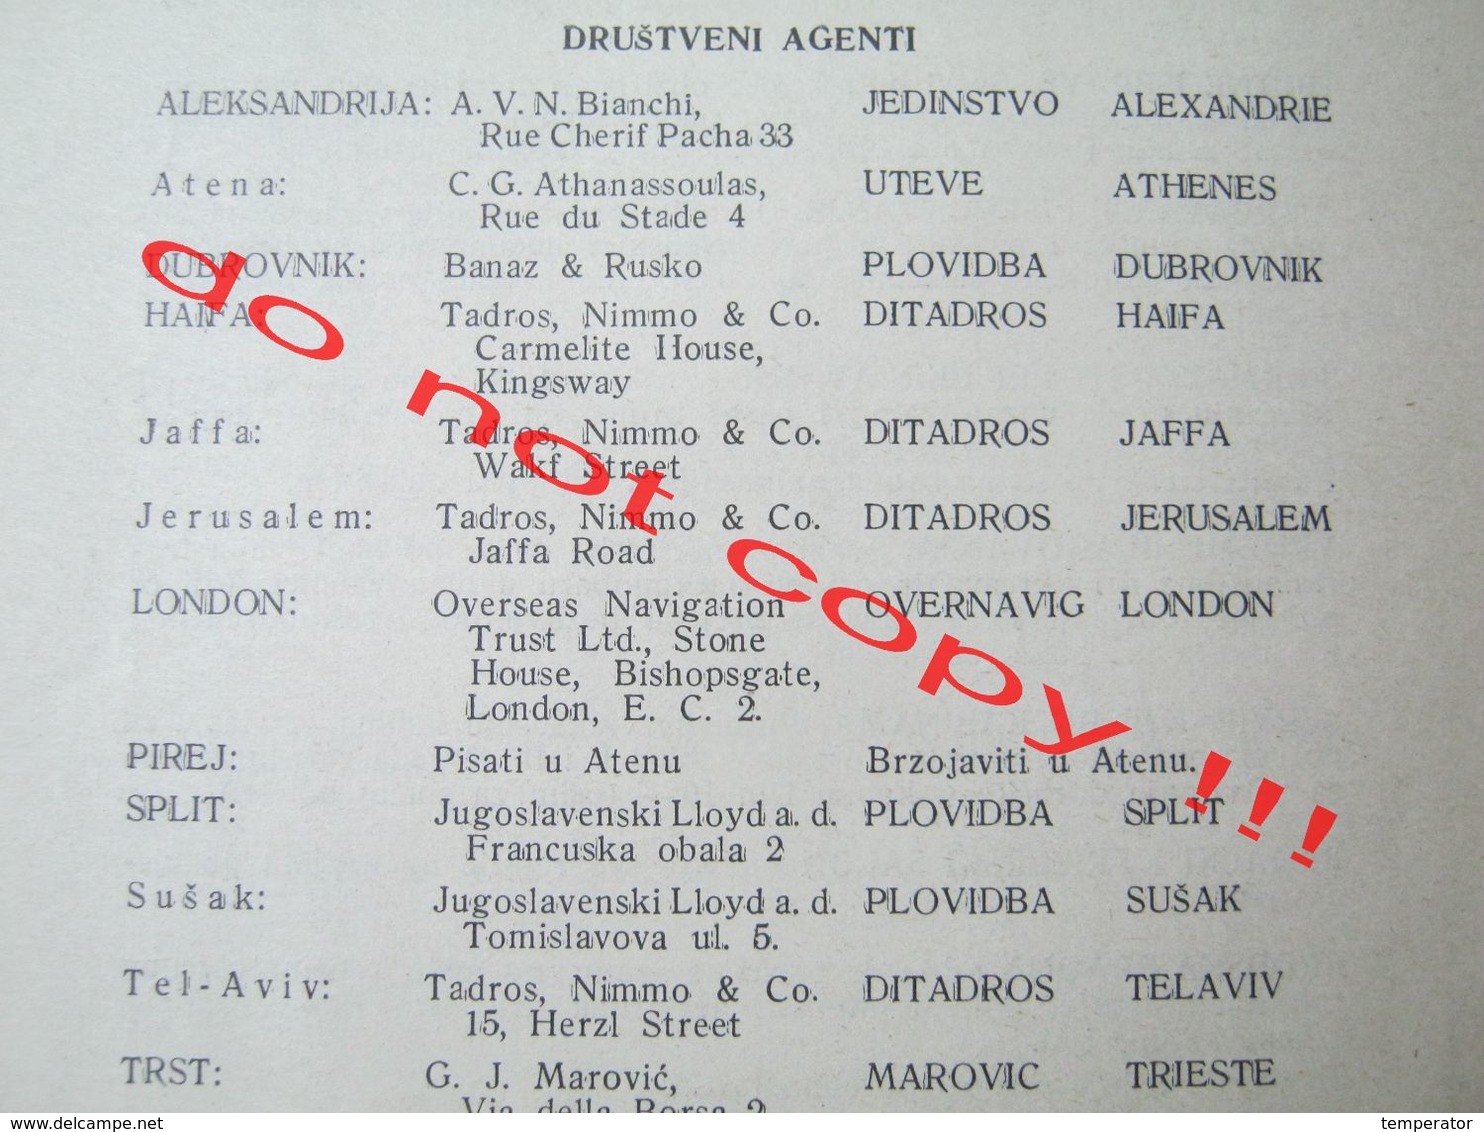 Judaica / JUGOSLAVENSKI LLOYD A.D. steamship "PRINCEZA OLGA ": ADRIATIC - GREECE - EGYPT - PALESTINE with price ( 1938 )